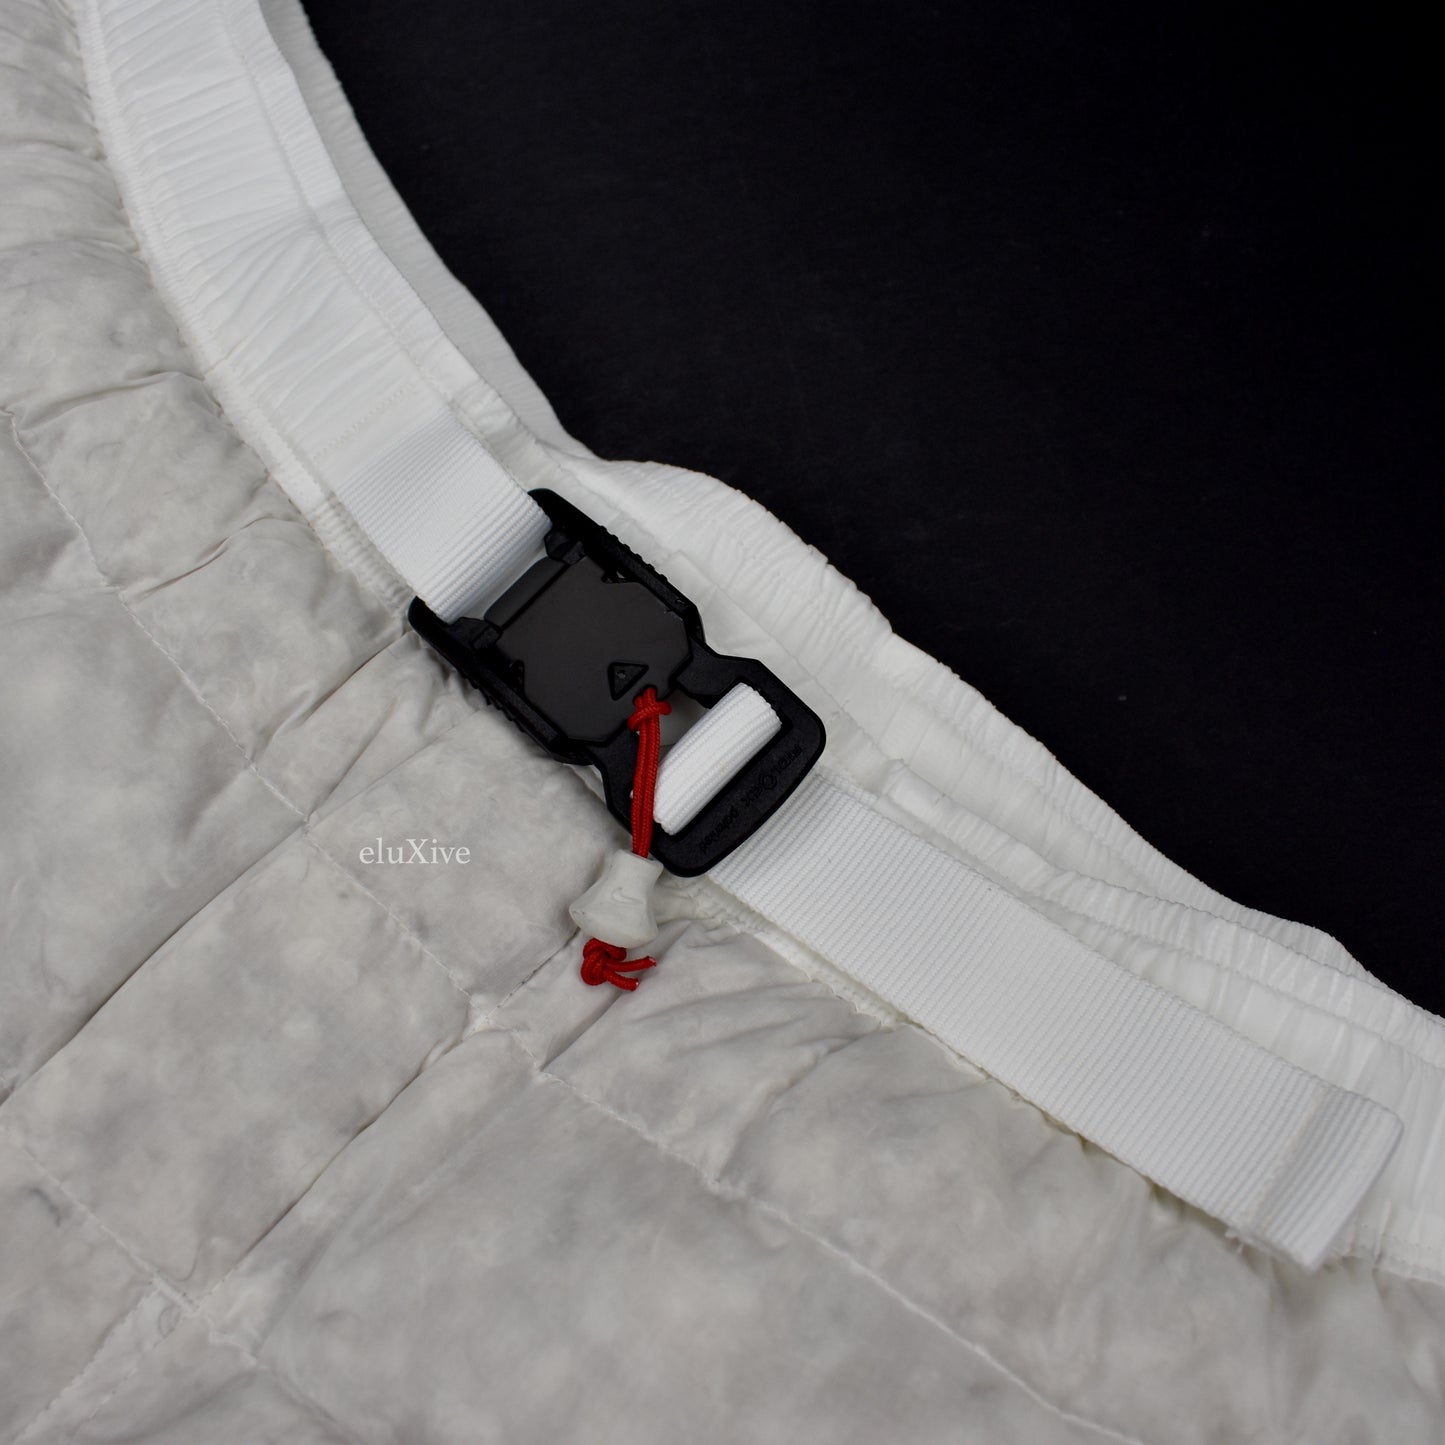 Nike x Tom Sachs - Down Fill Puffer Shorts (White)